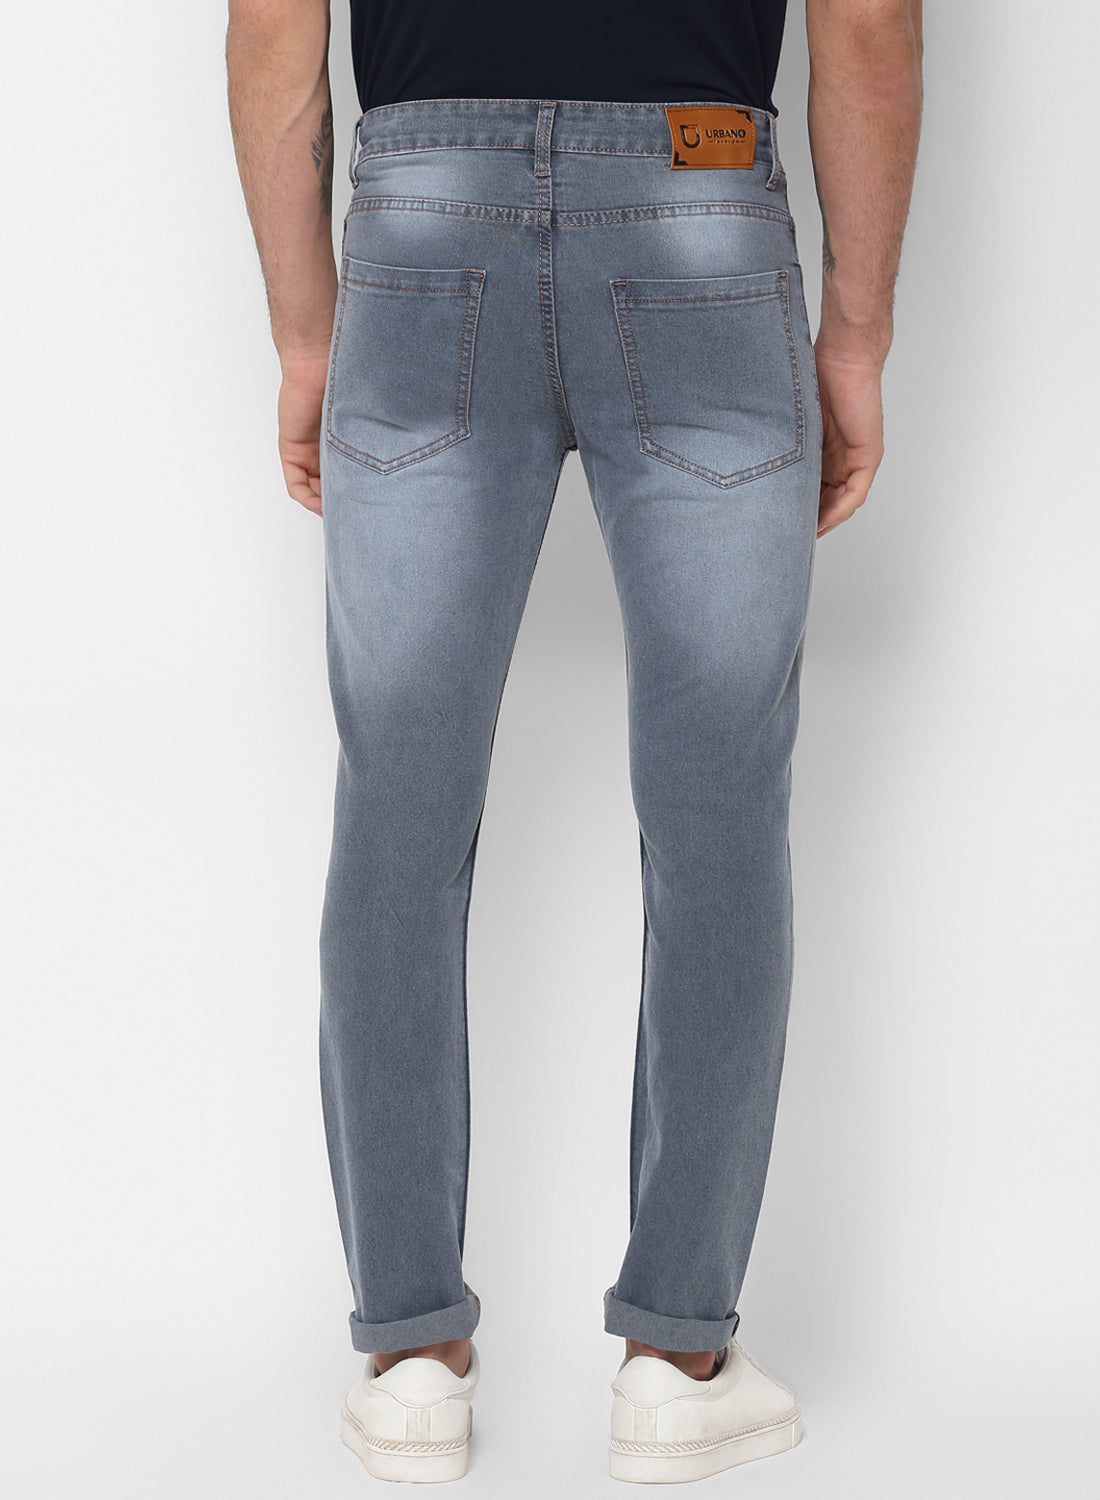 Men's Dark Grey Slim Fit Jeans Stretchable